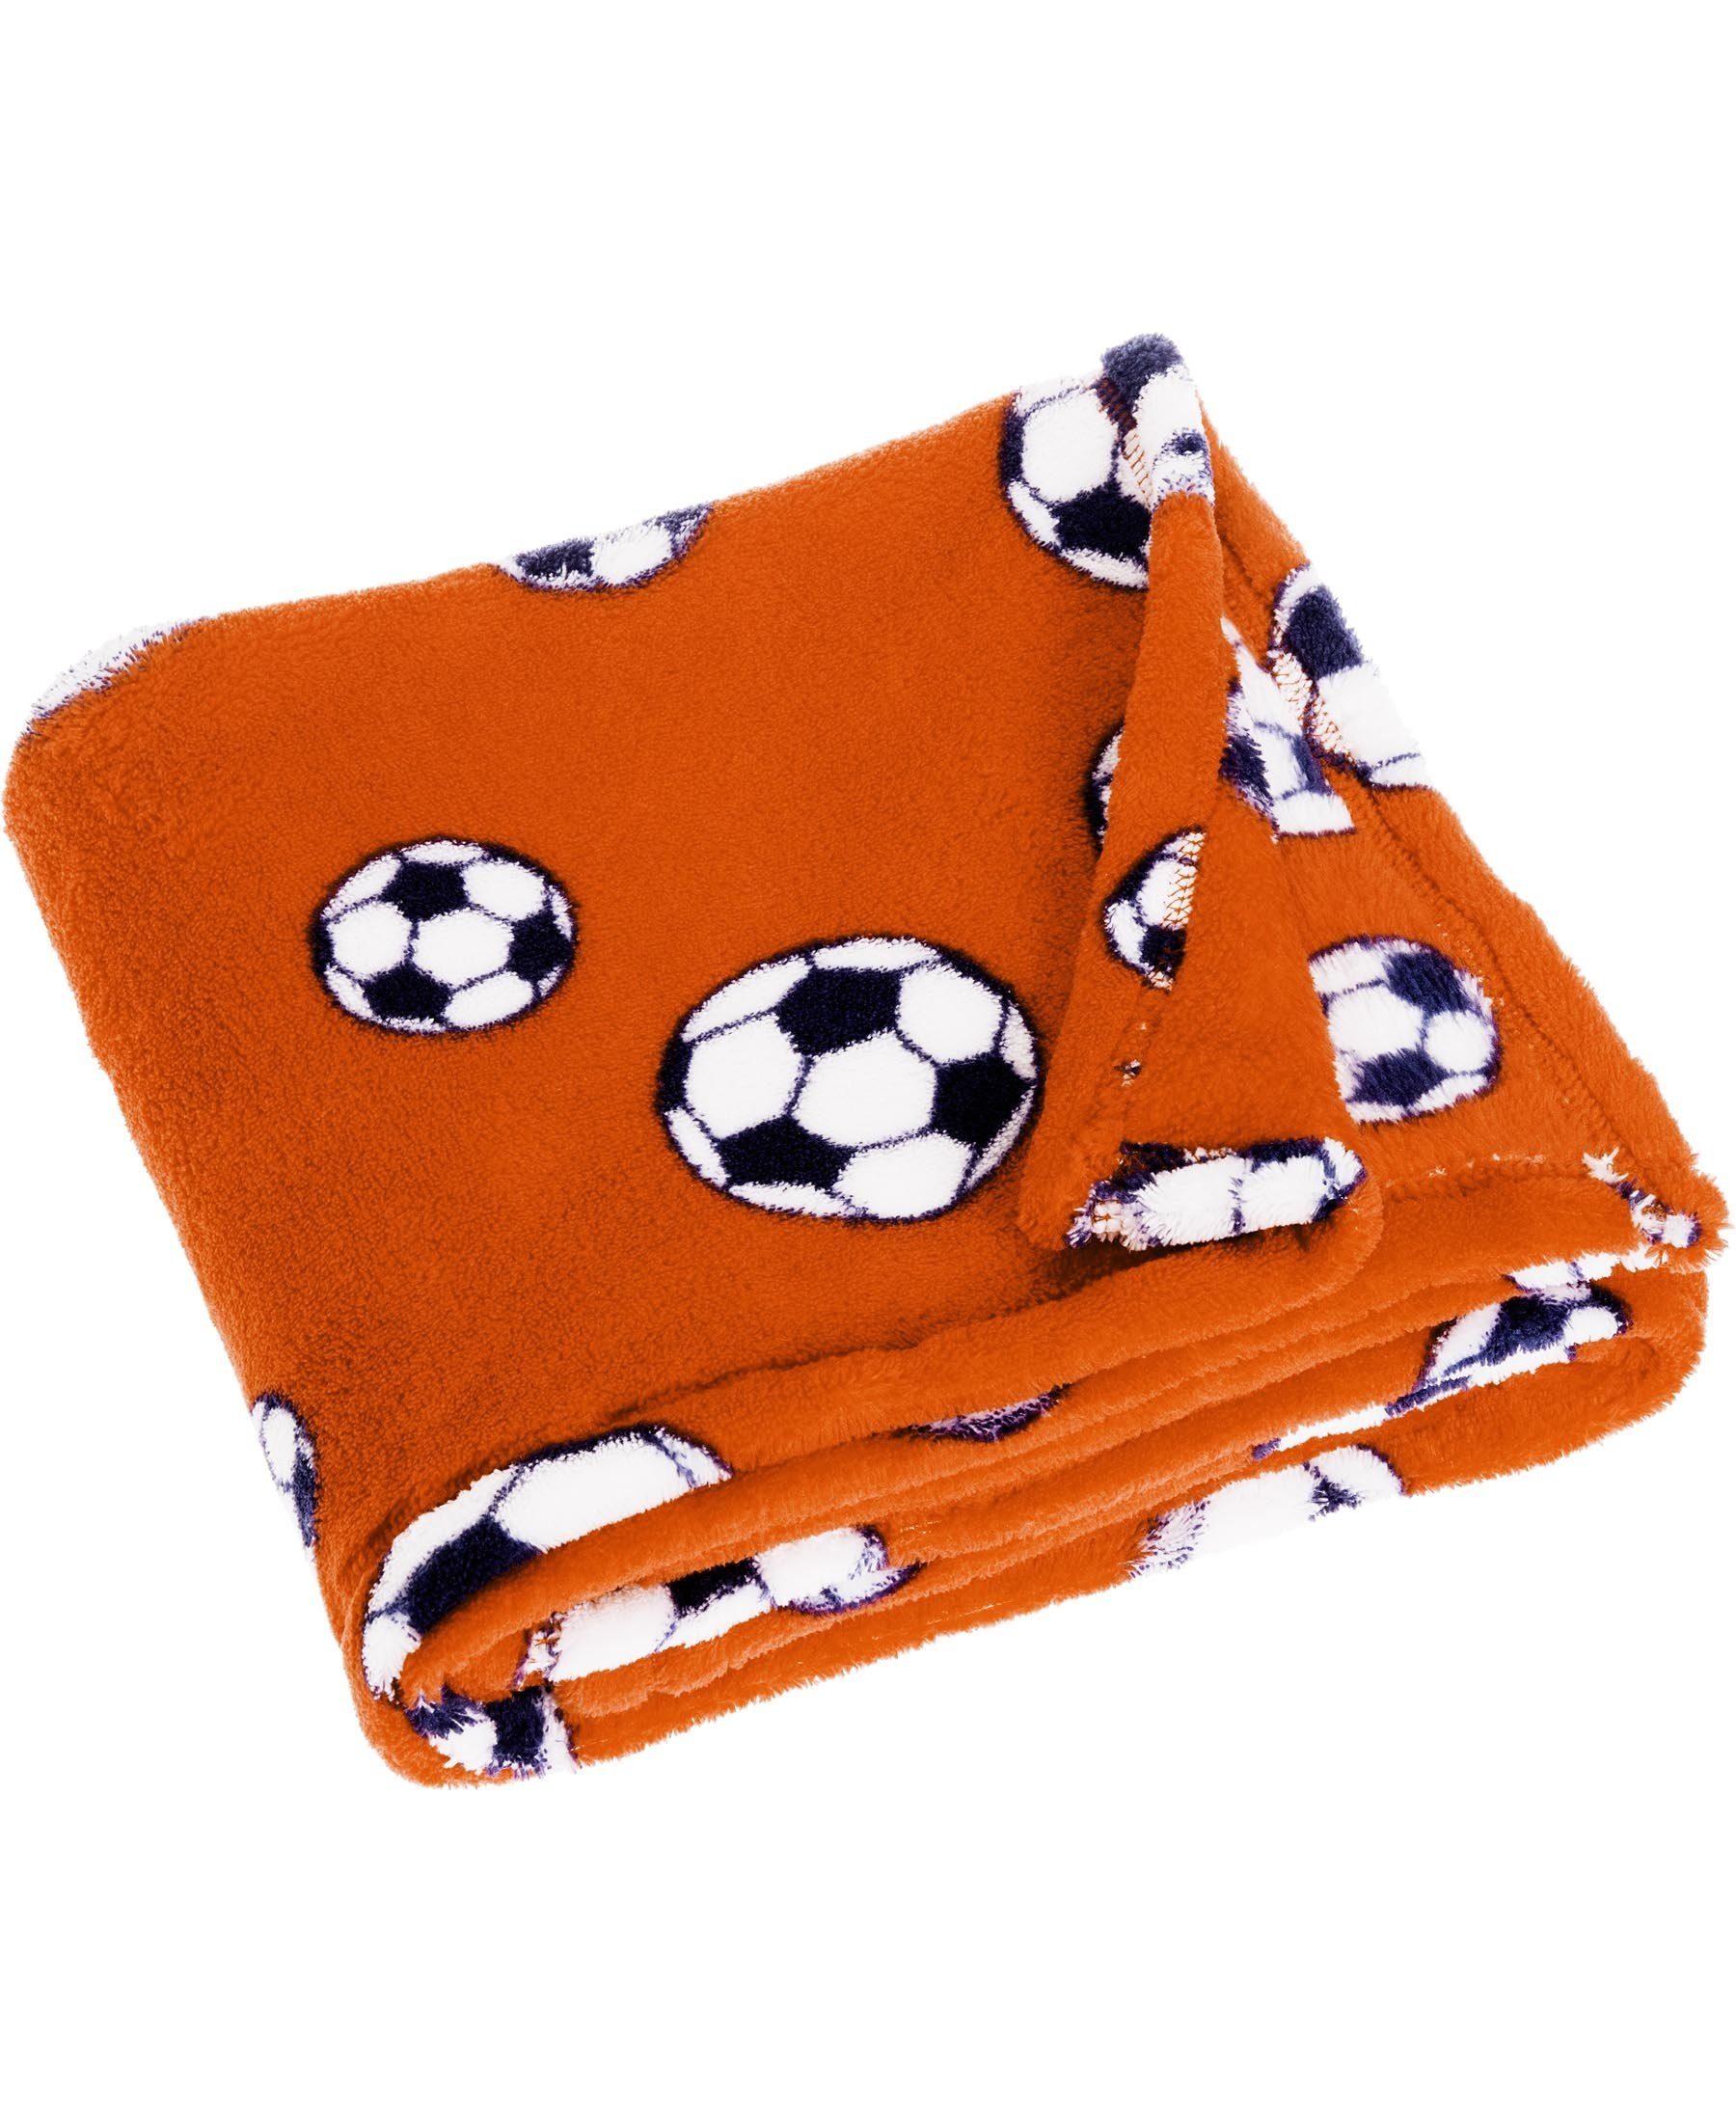 Babydecke Fleece-Decke Fußball, Playshoes orange